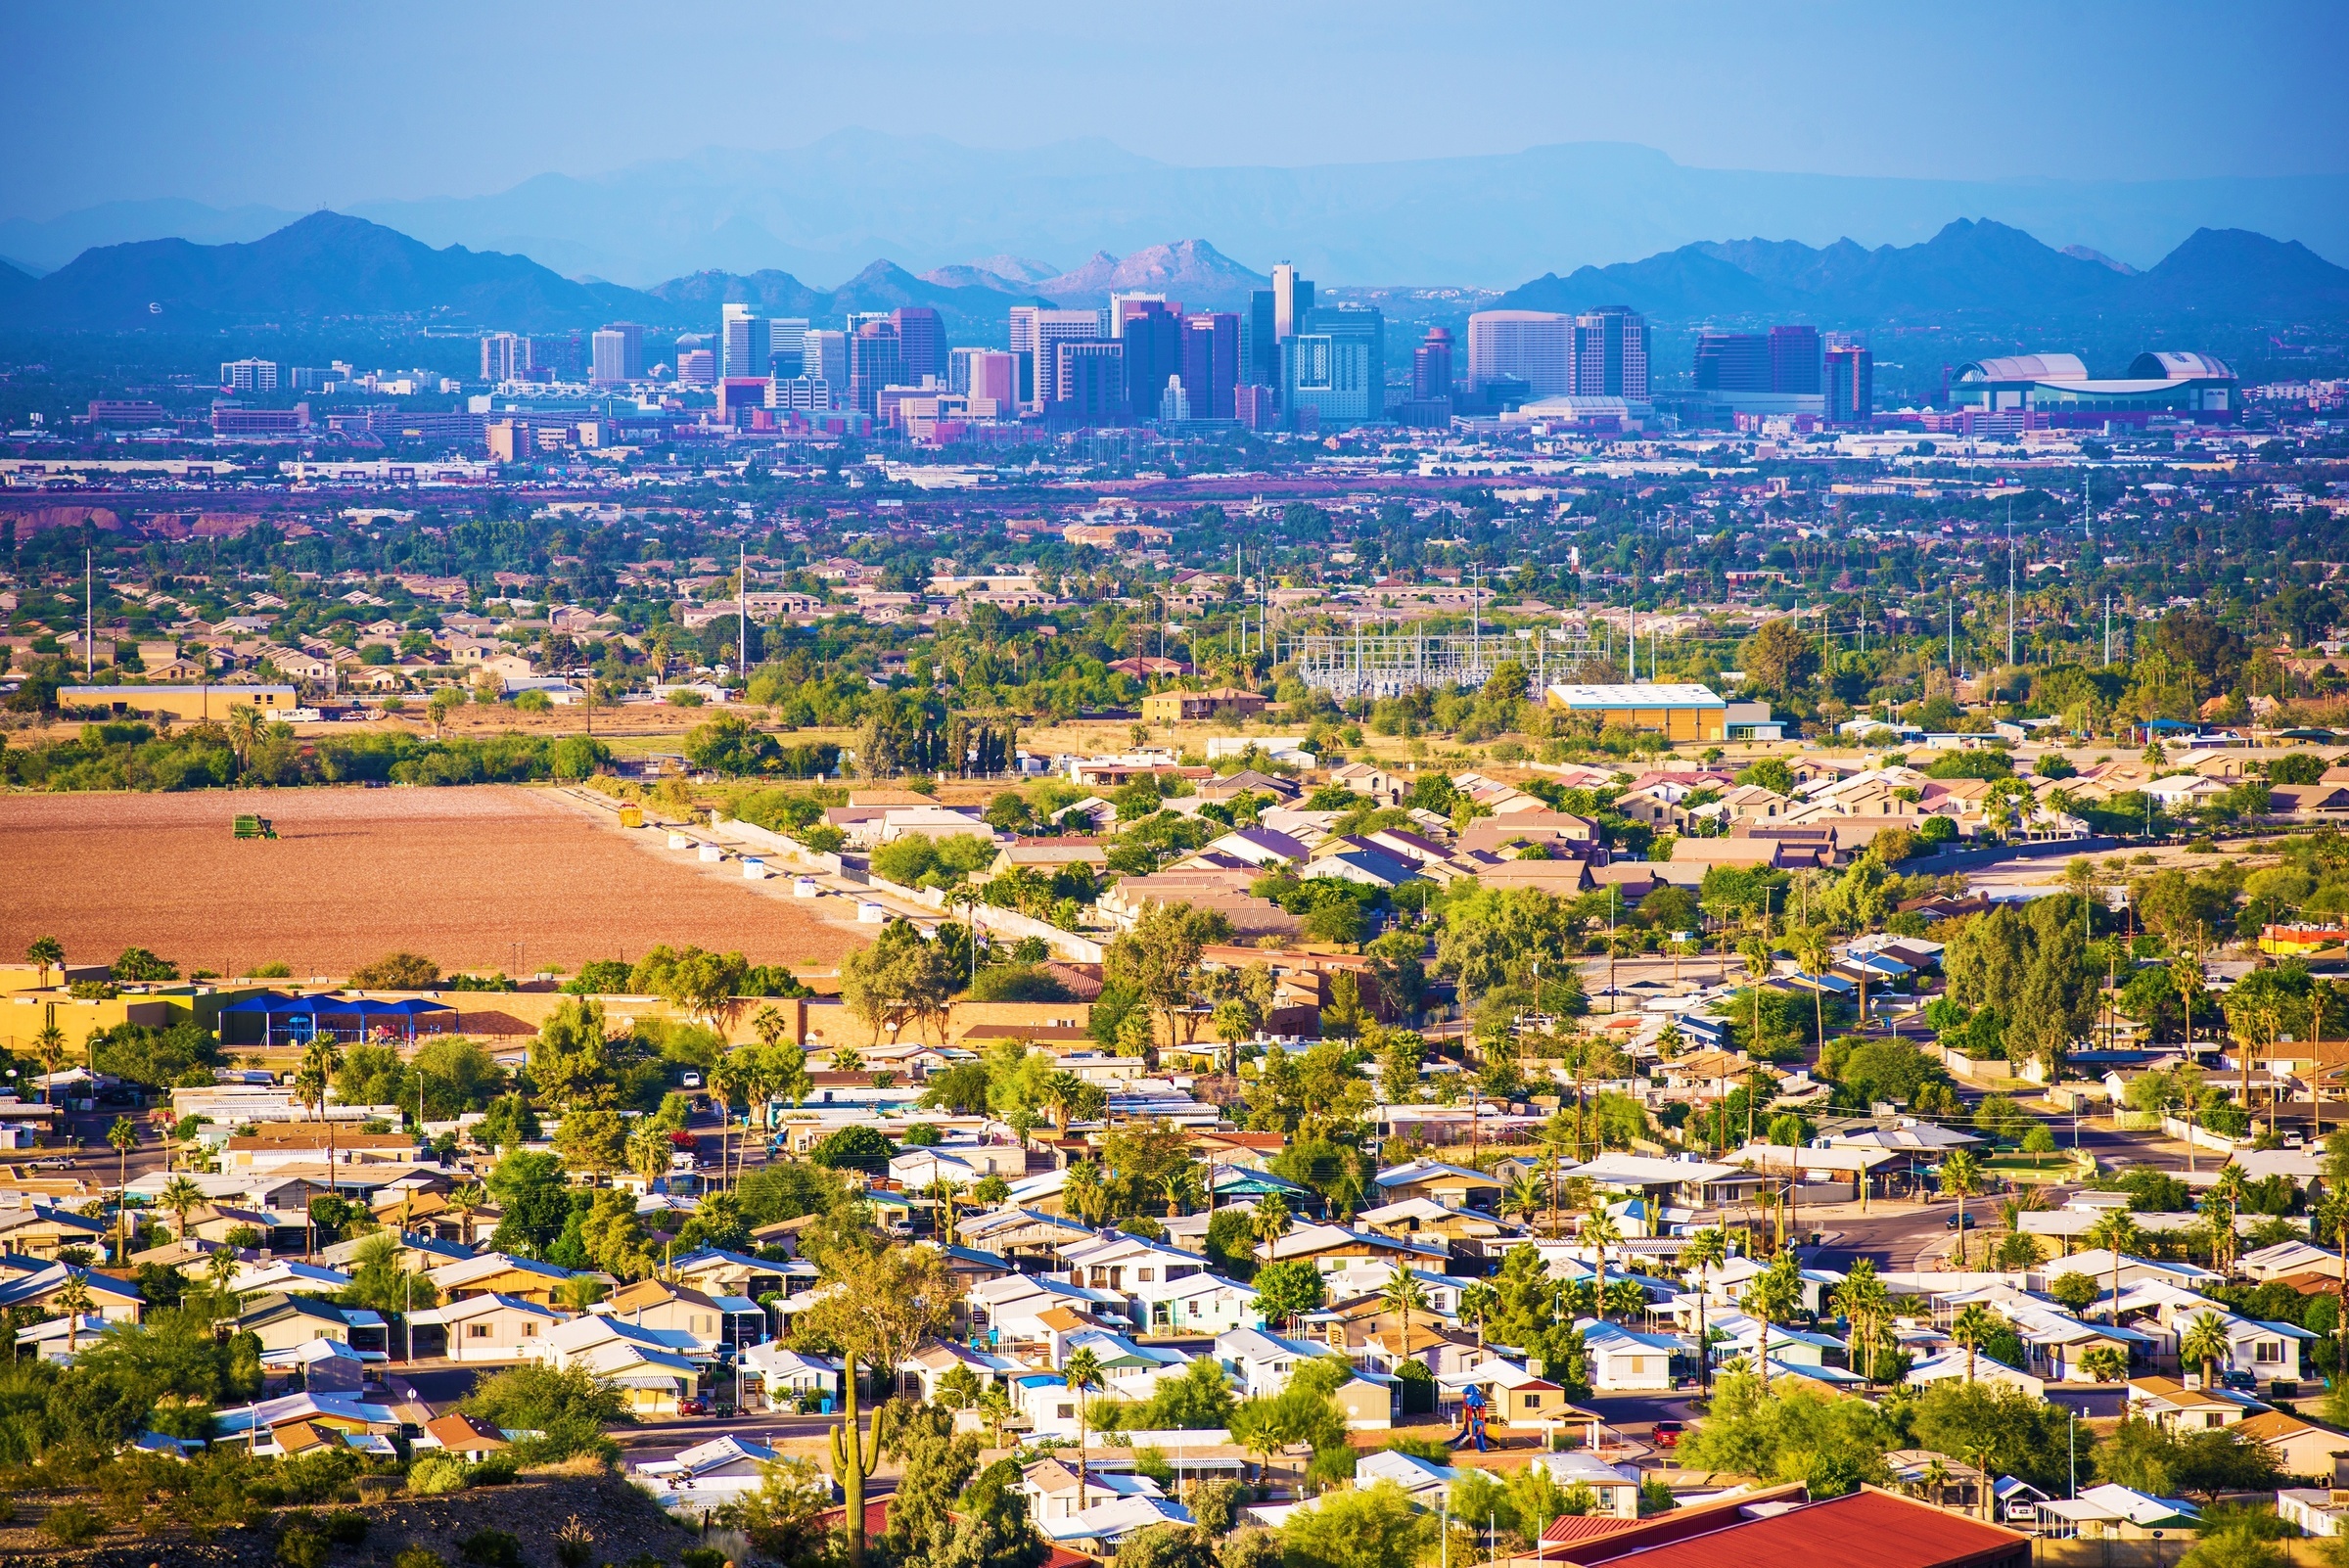 City of Phoenix Panorama. Phoenix, Arizona, United States. Blue skies and sunny day.